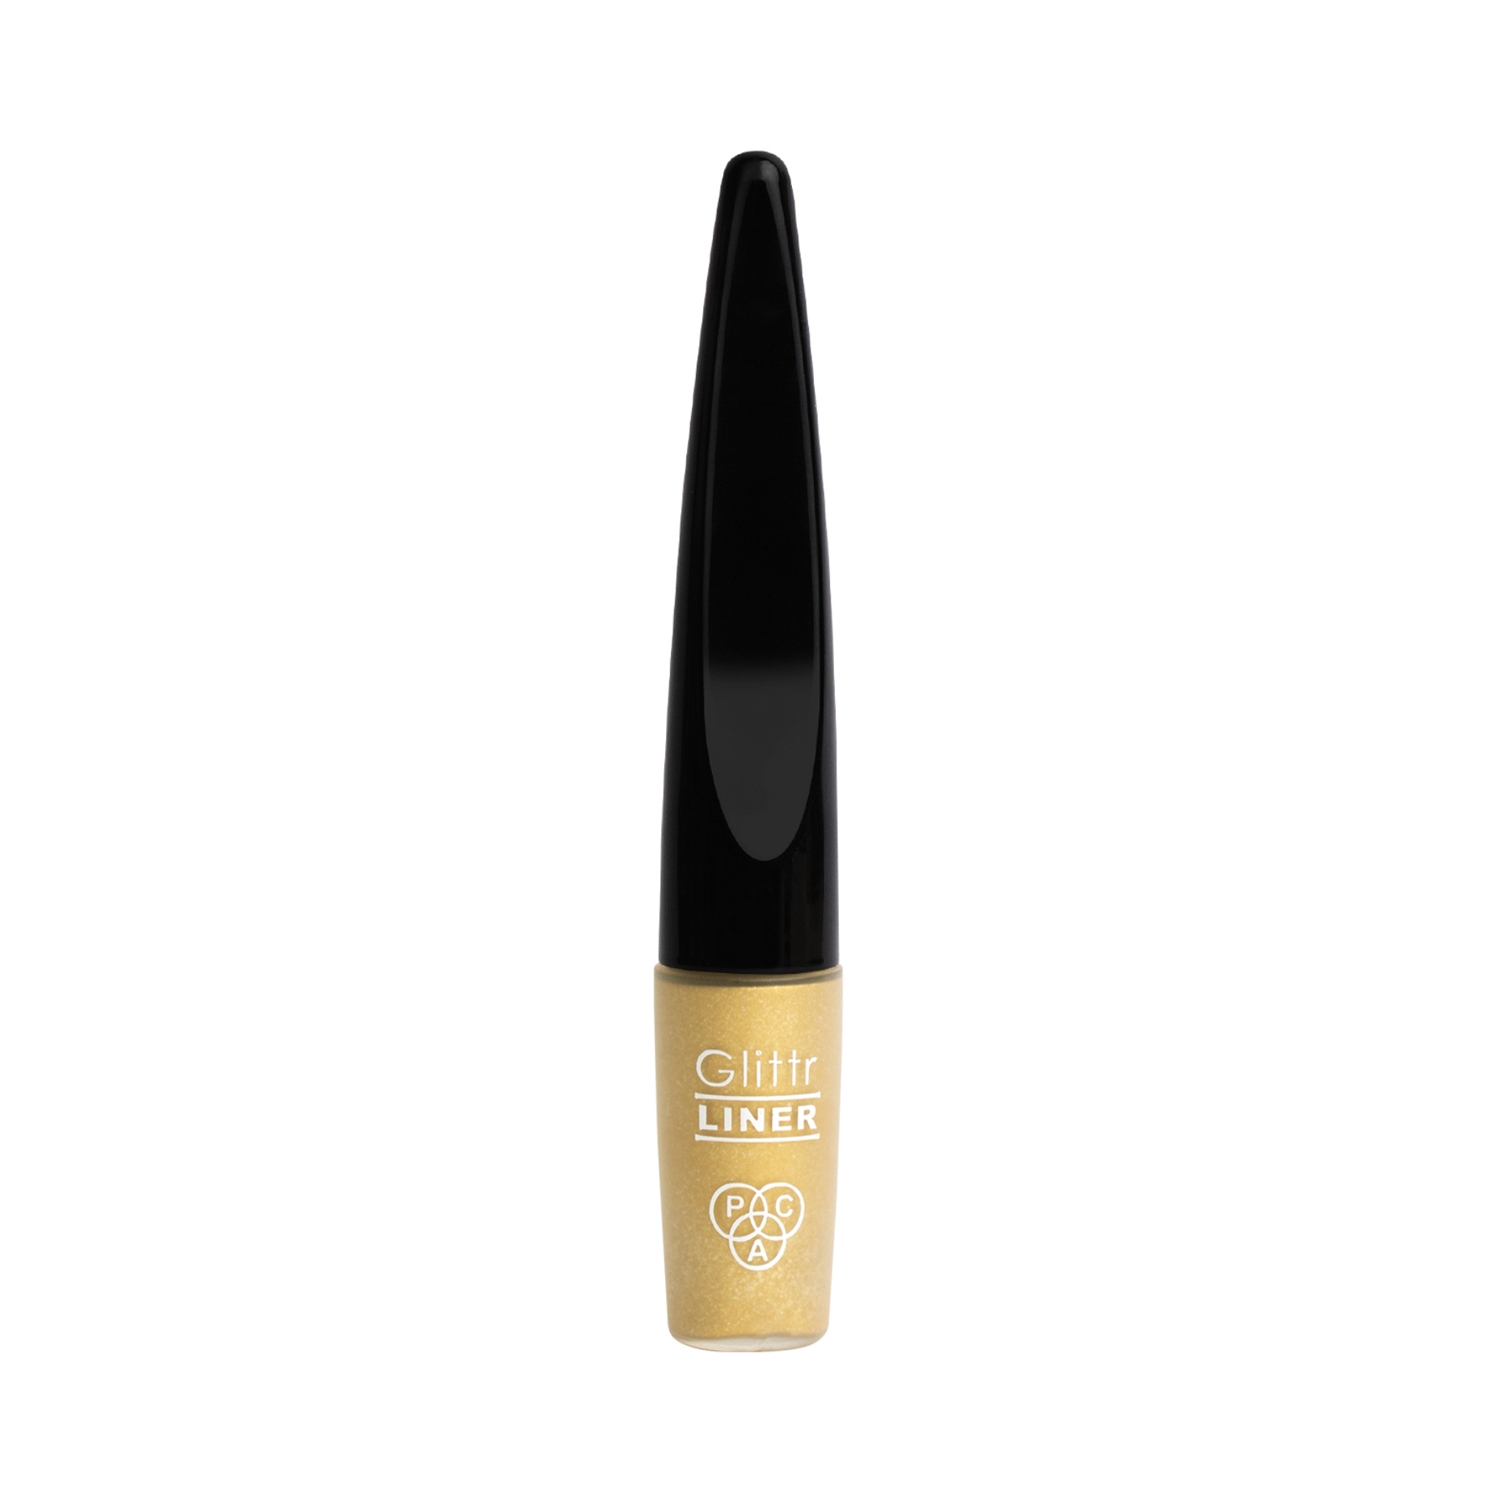 Buy L'Oreal Paris Super Liner Gel Intenza Eyeliner, Profound Black, 2.8g - L 'Oreal Paris, Tira: Shop Makeup, Skin, Hair & Beauty Products Online